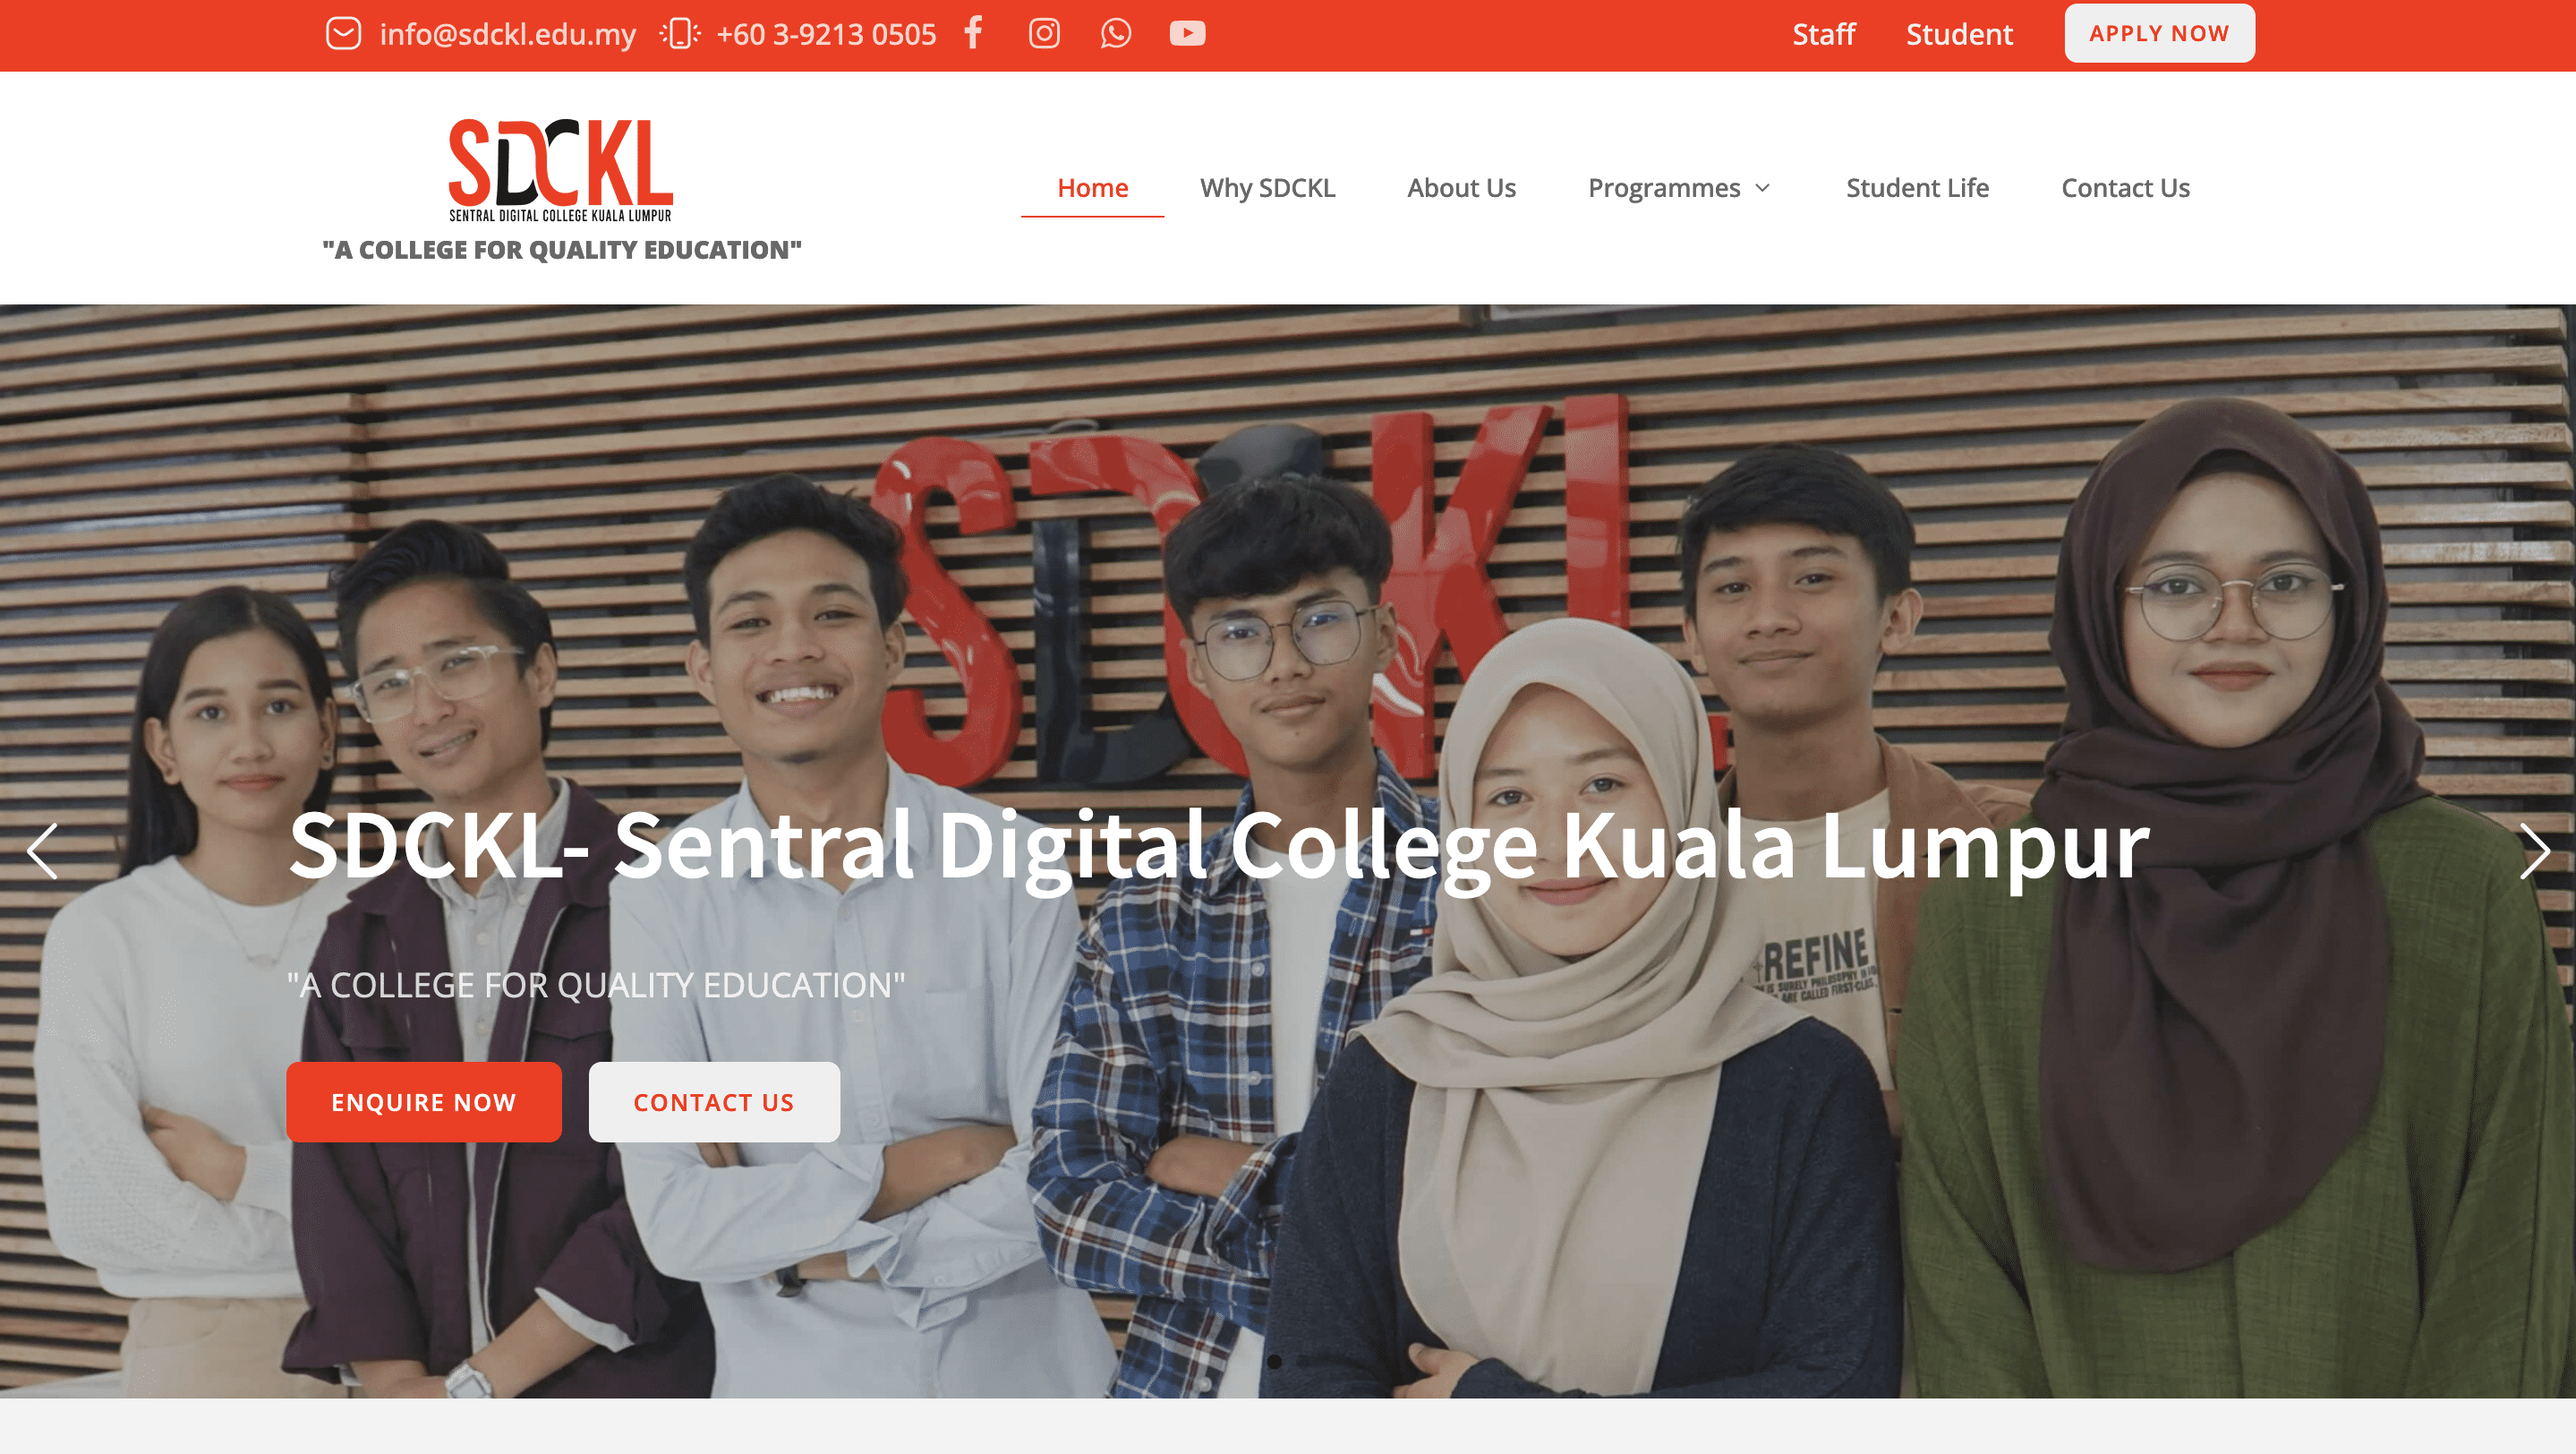 SDC KL Website Design Malaysia by Specflux Solution